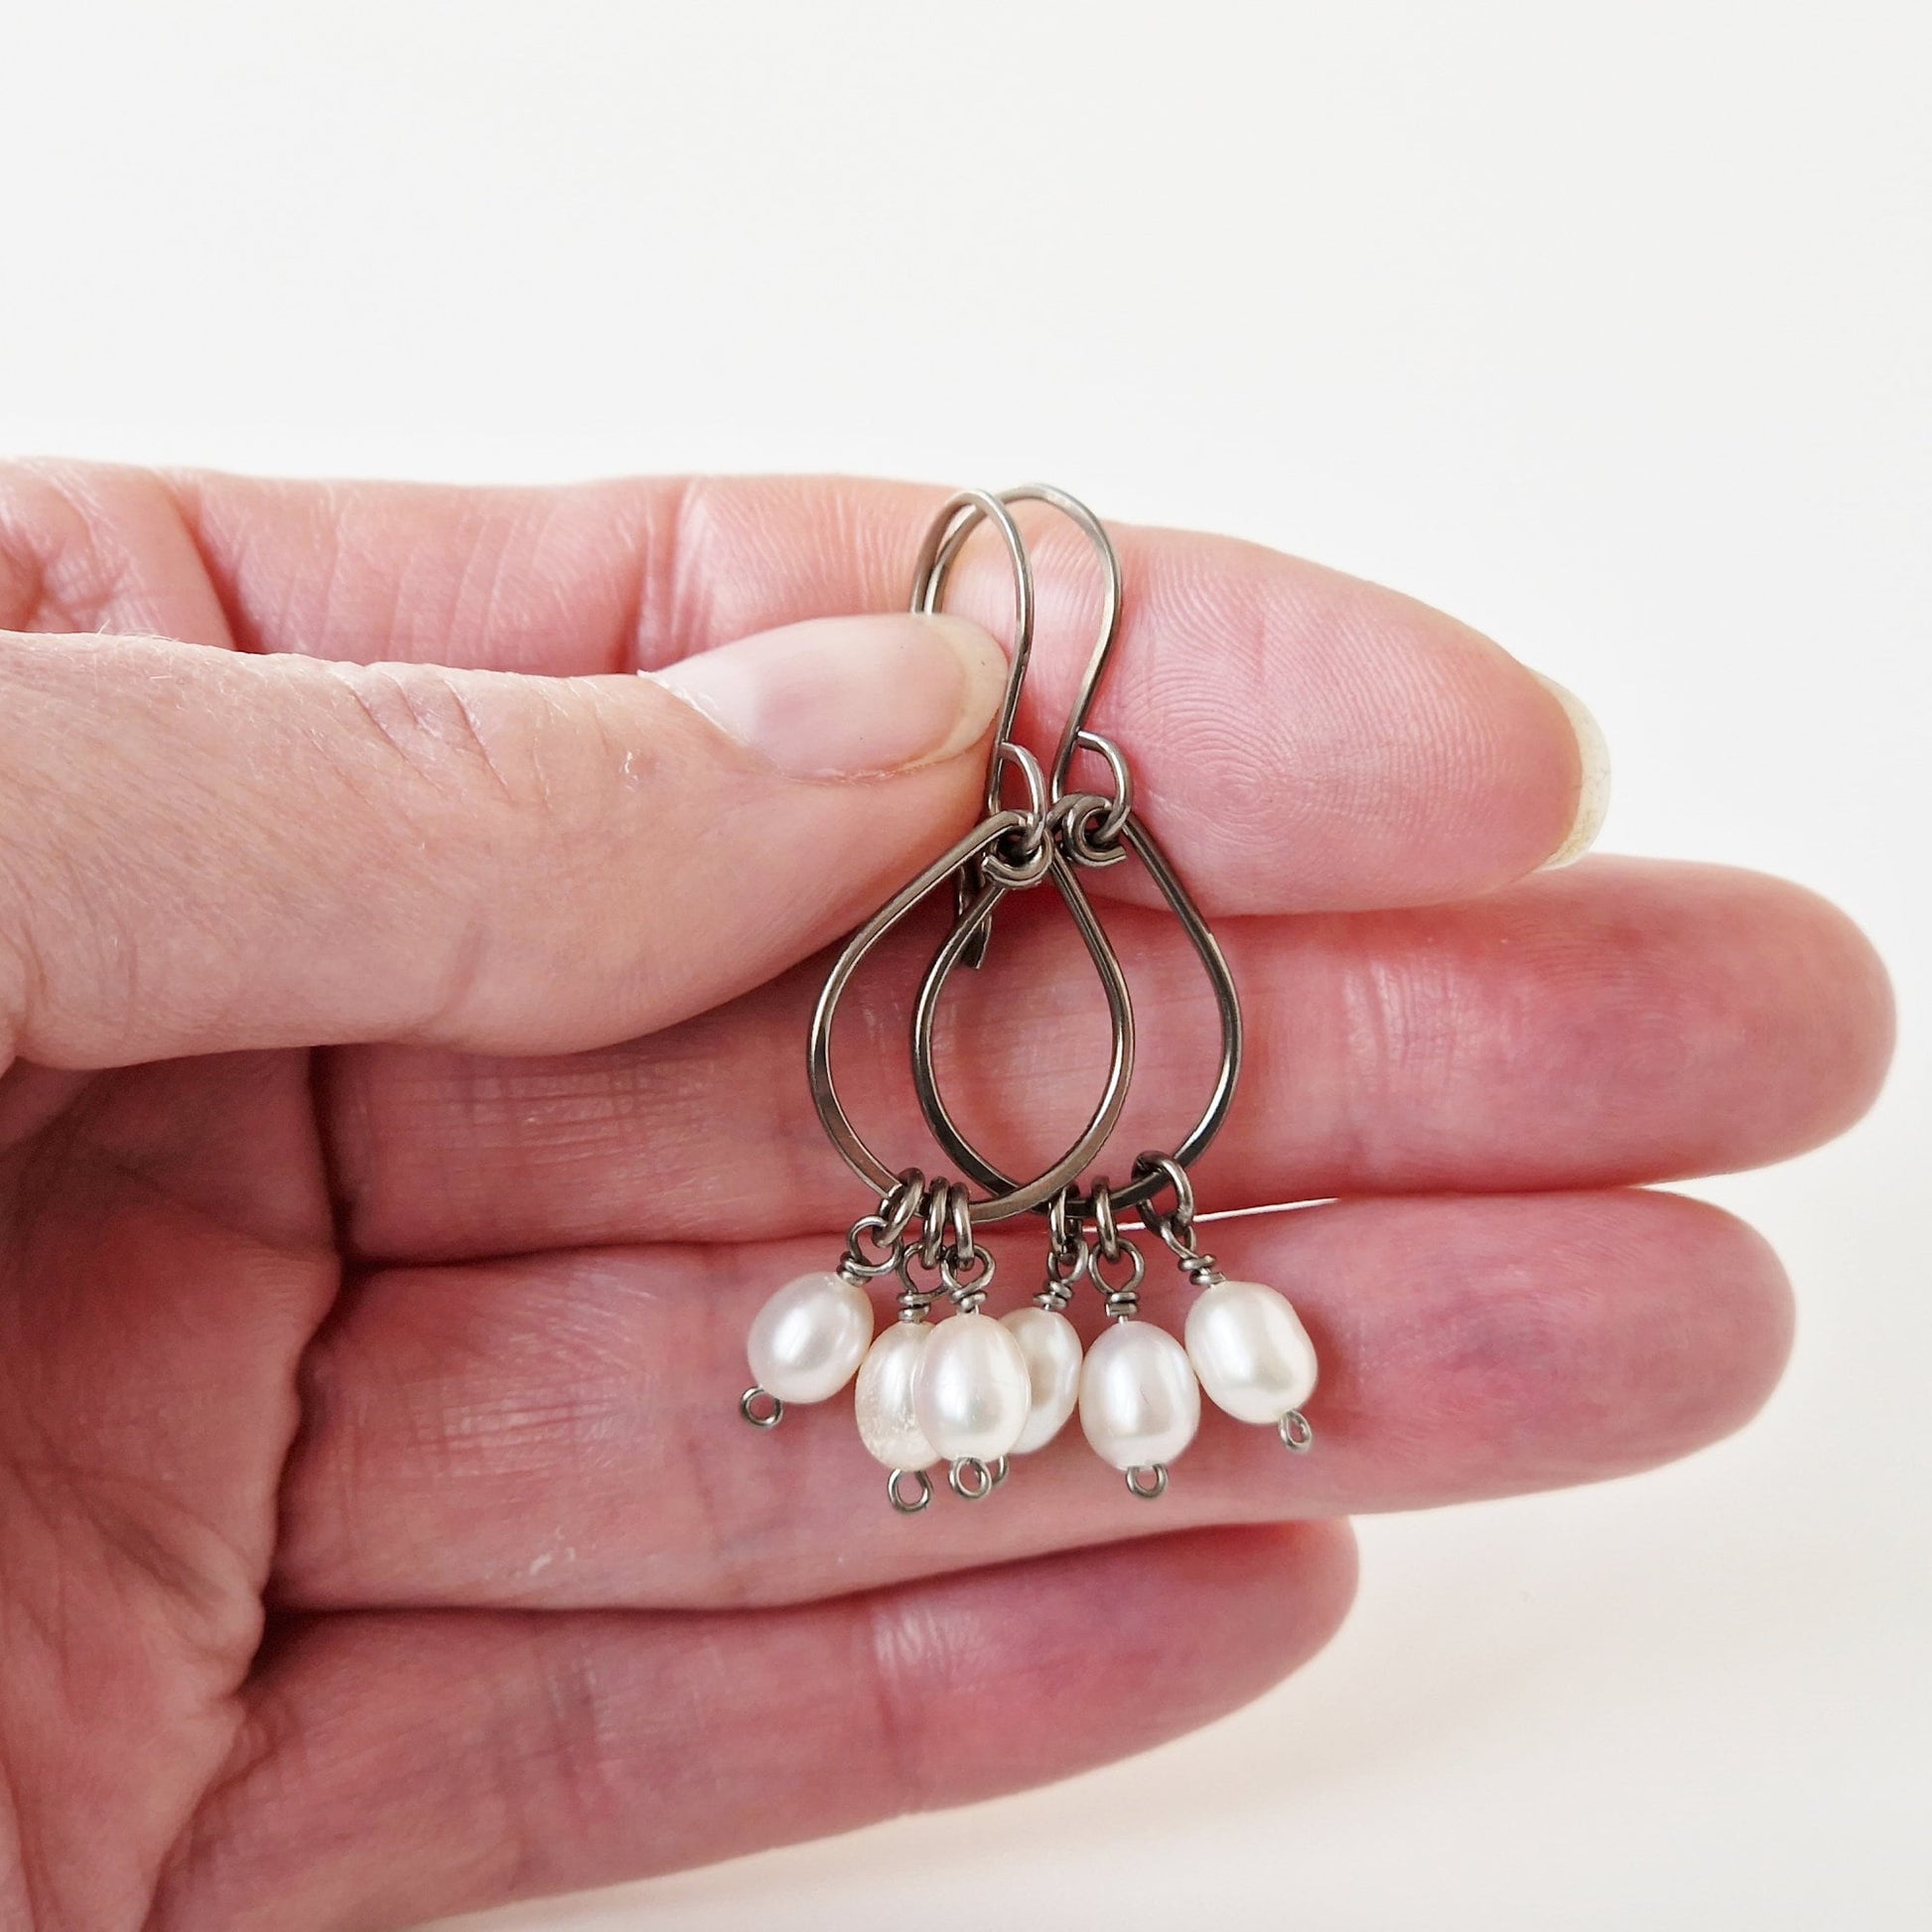 Hypoallergenic Teardrop Earrings with White Pearls